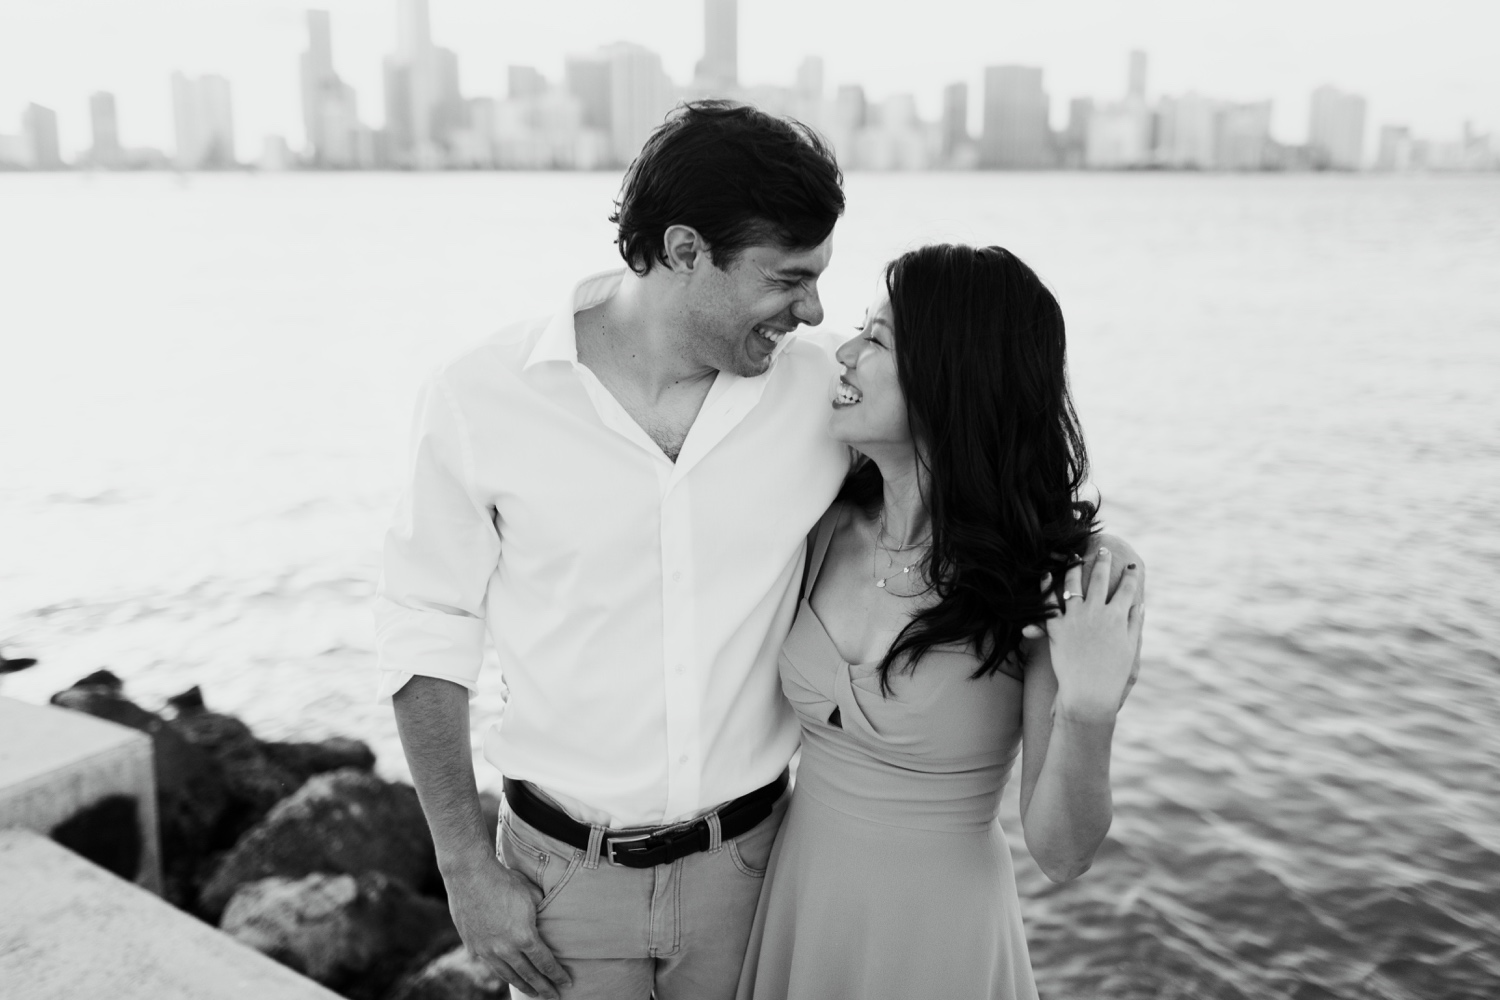 Key Biscayne Engagement Photos Miami Wedding Photographer